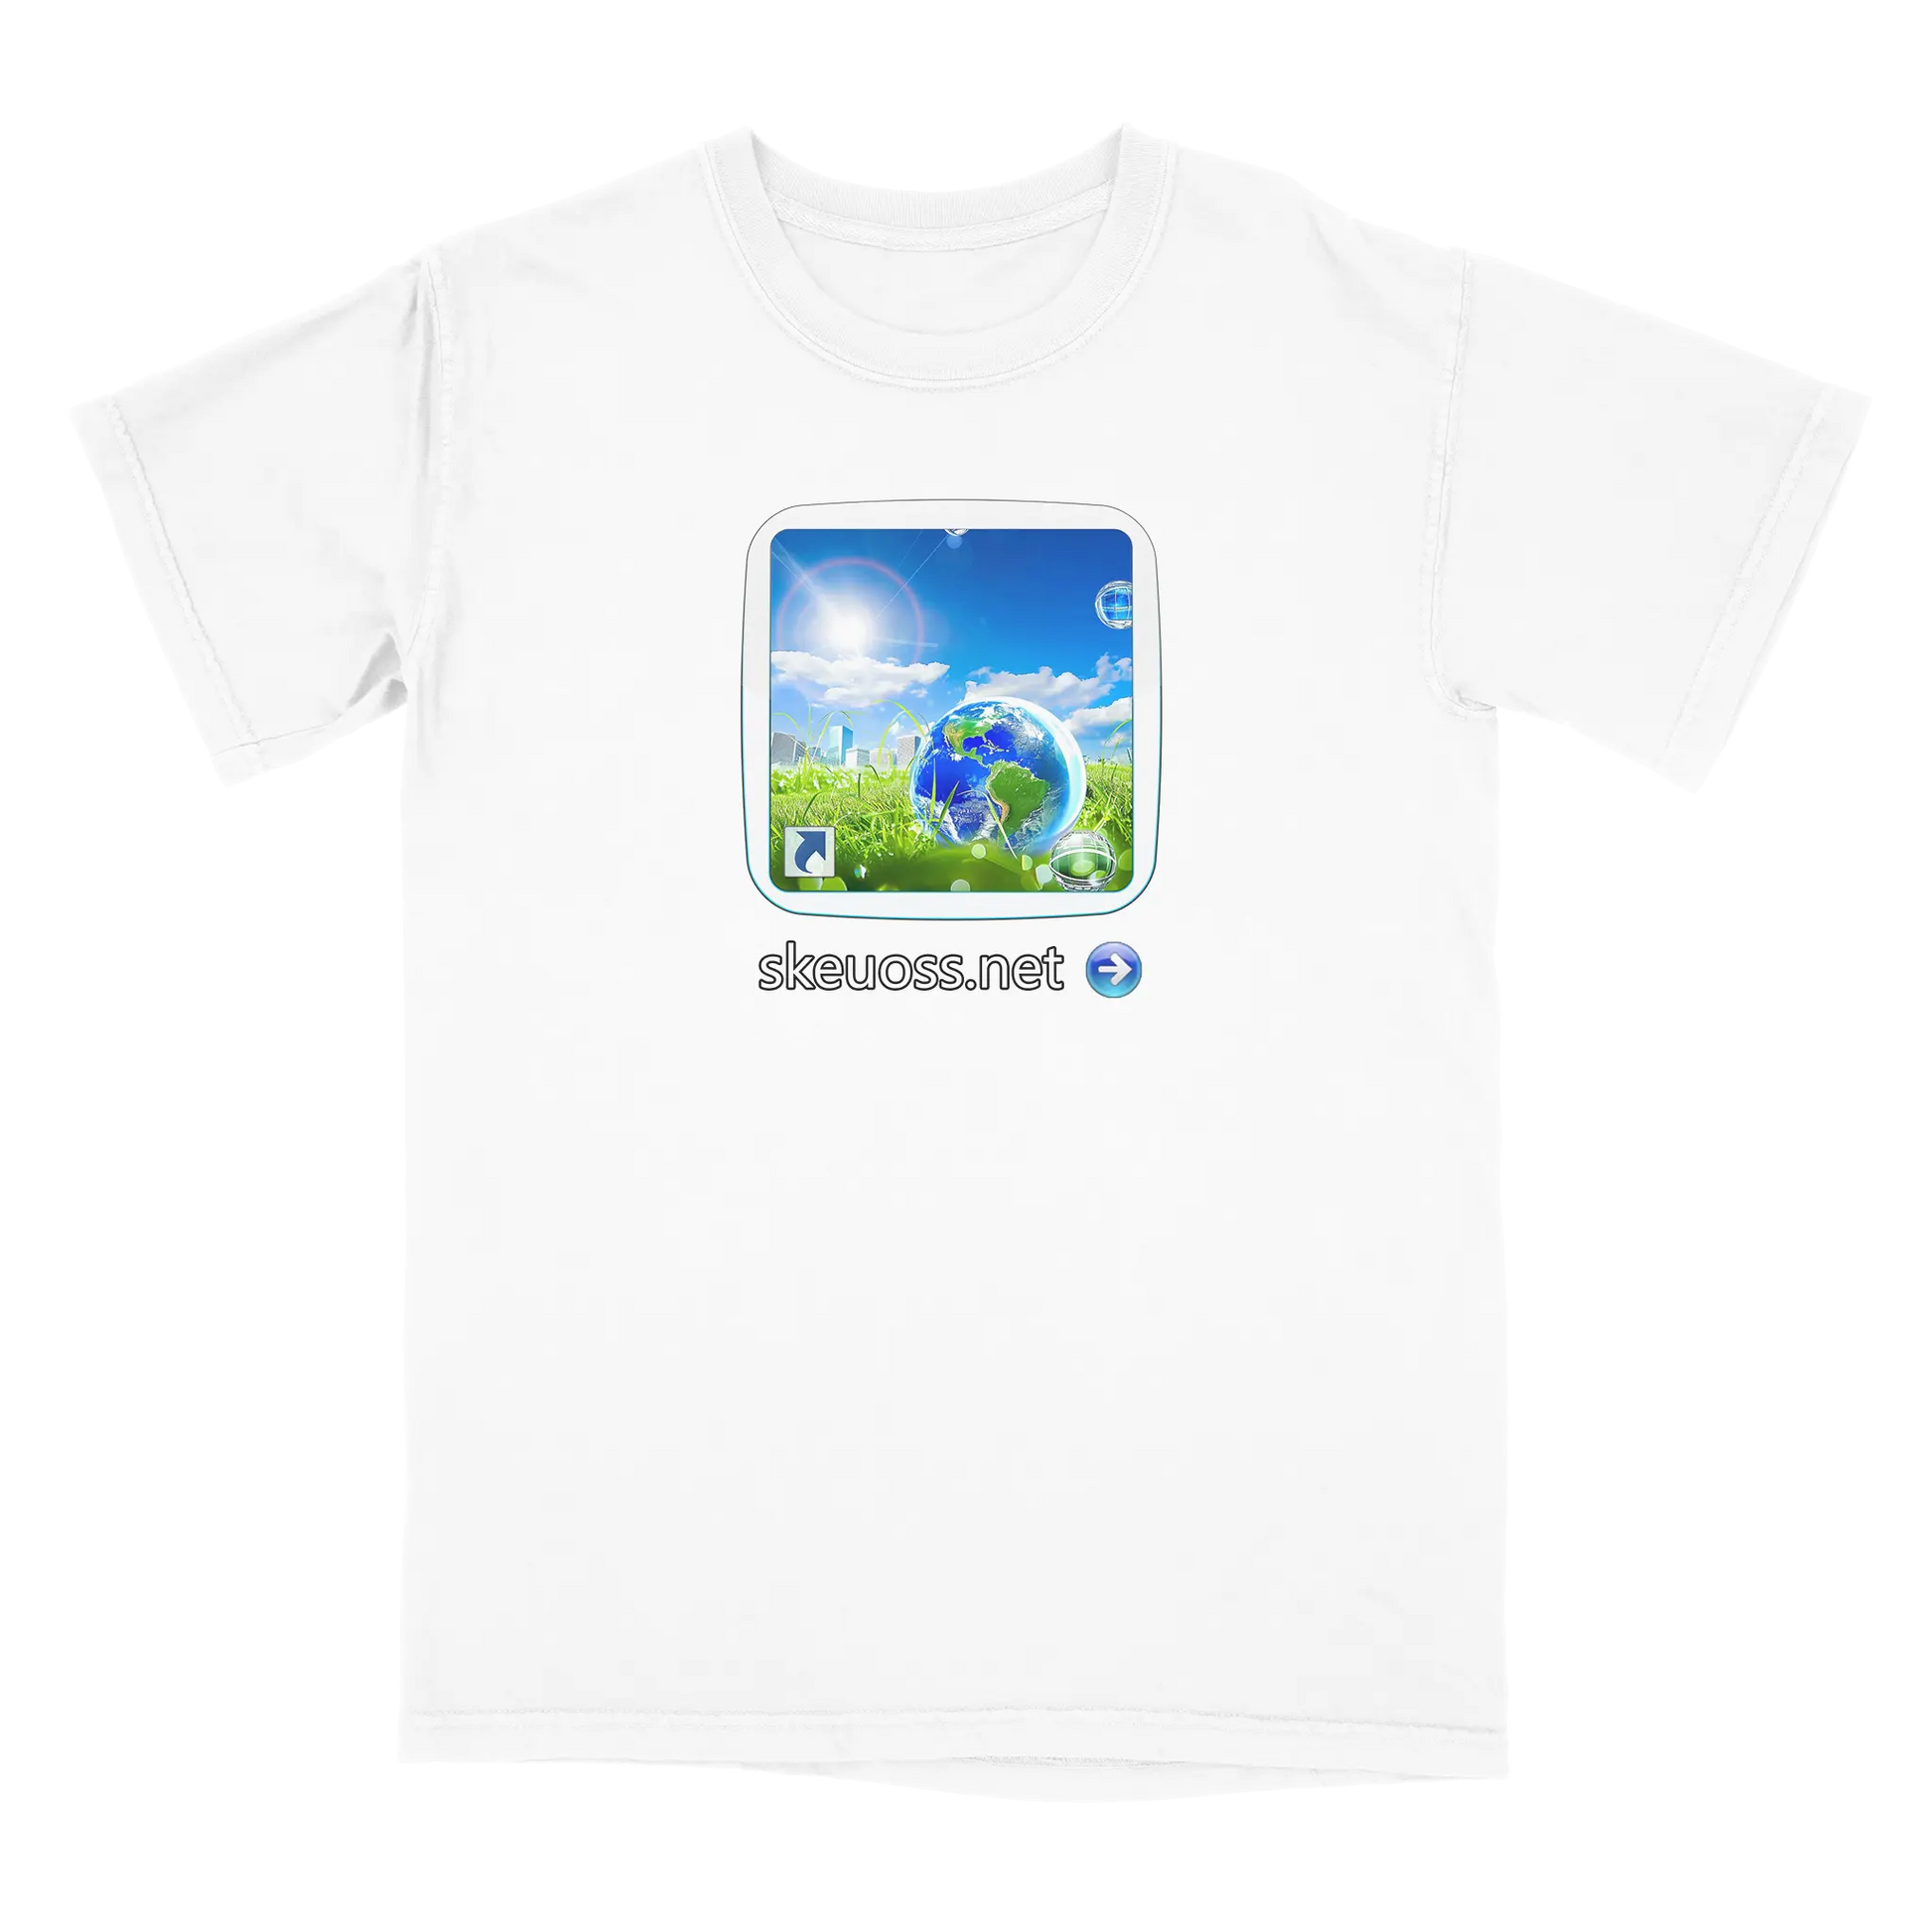 Frutiger Aero T-shirt - User Login Collection - User 281